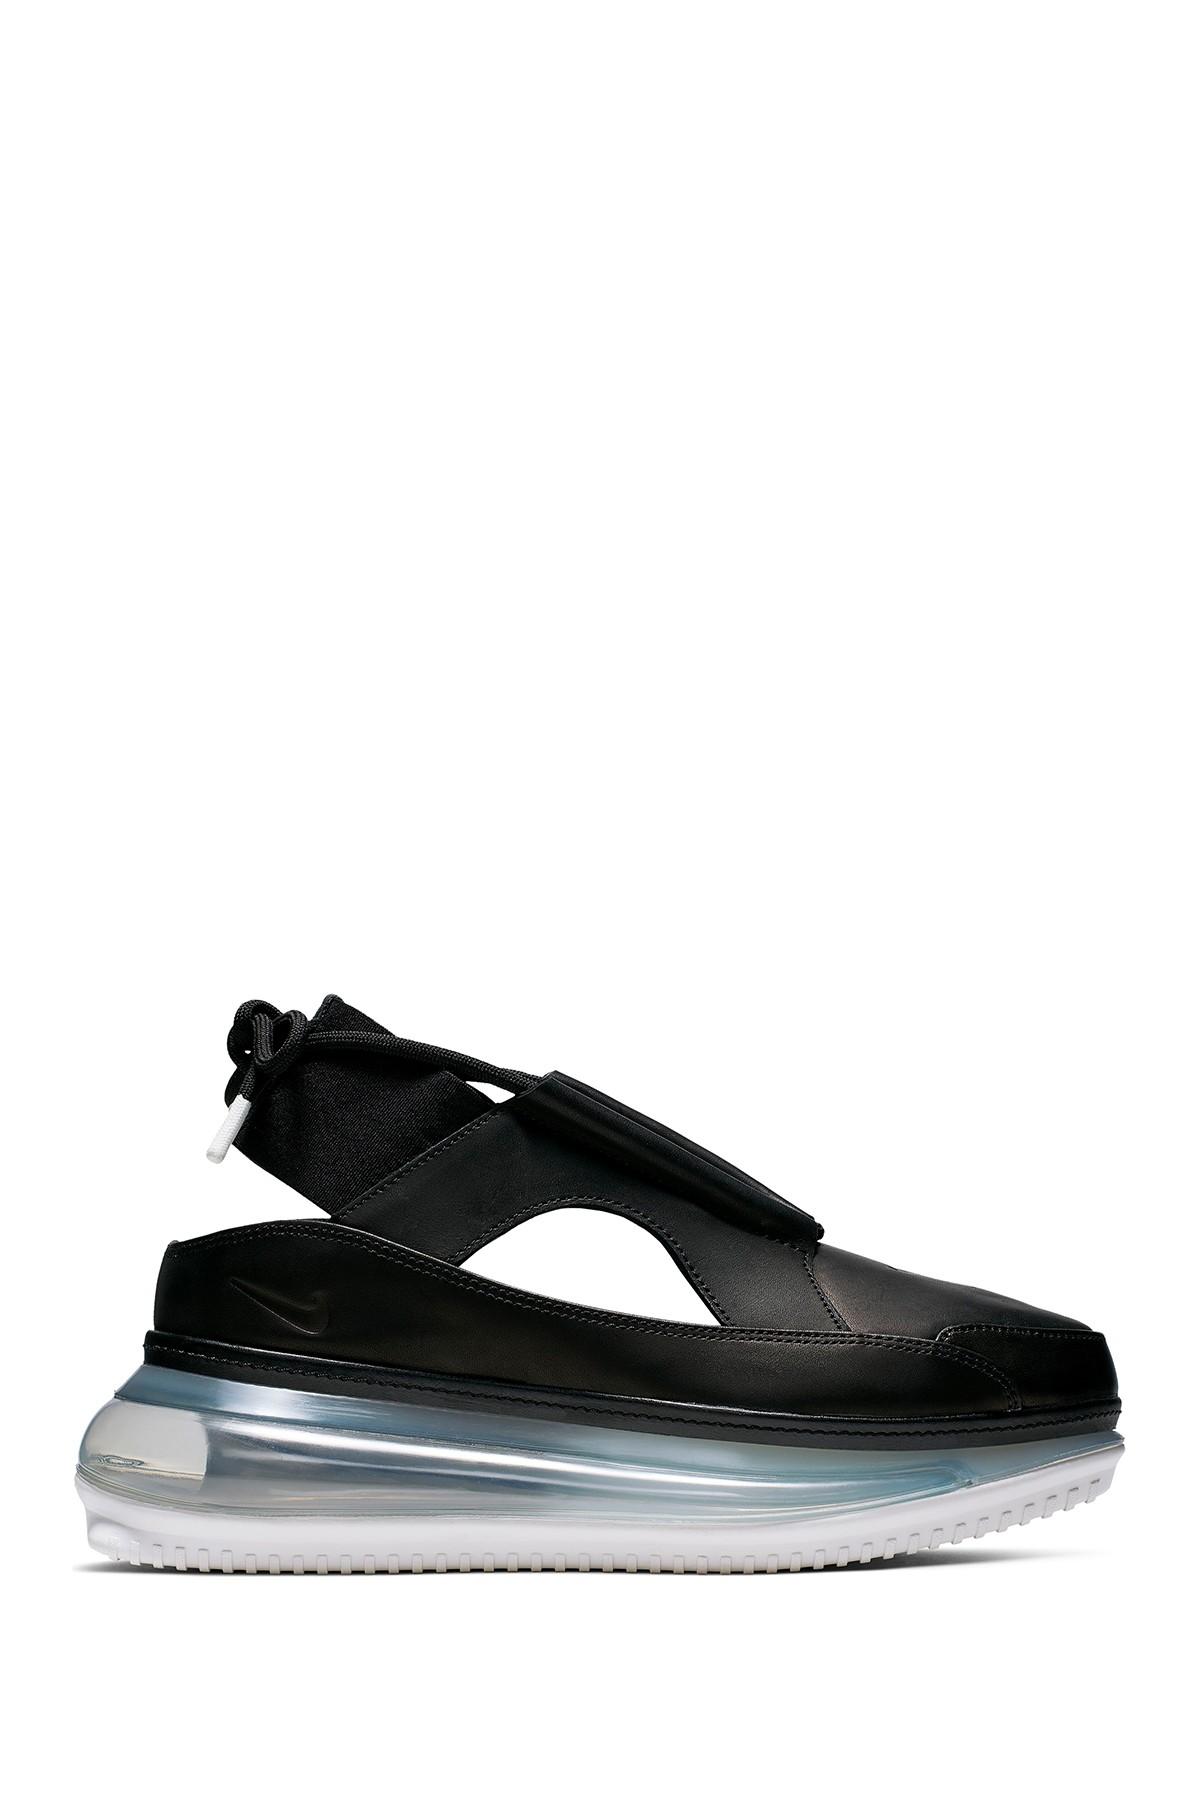 Thermal Brawl Superiority Nike Air Max Ff 720 Shoe in Black | Lyst